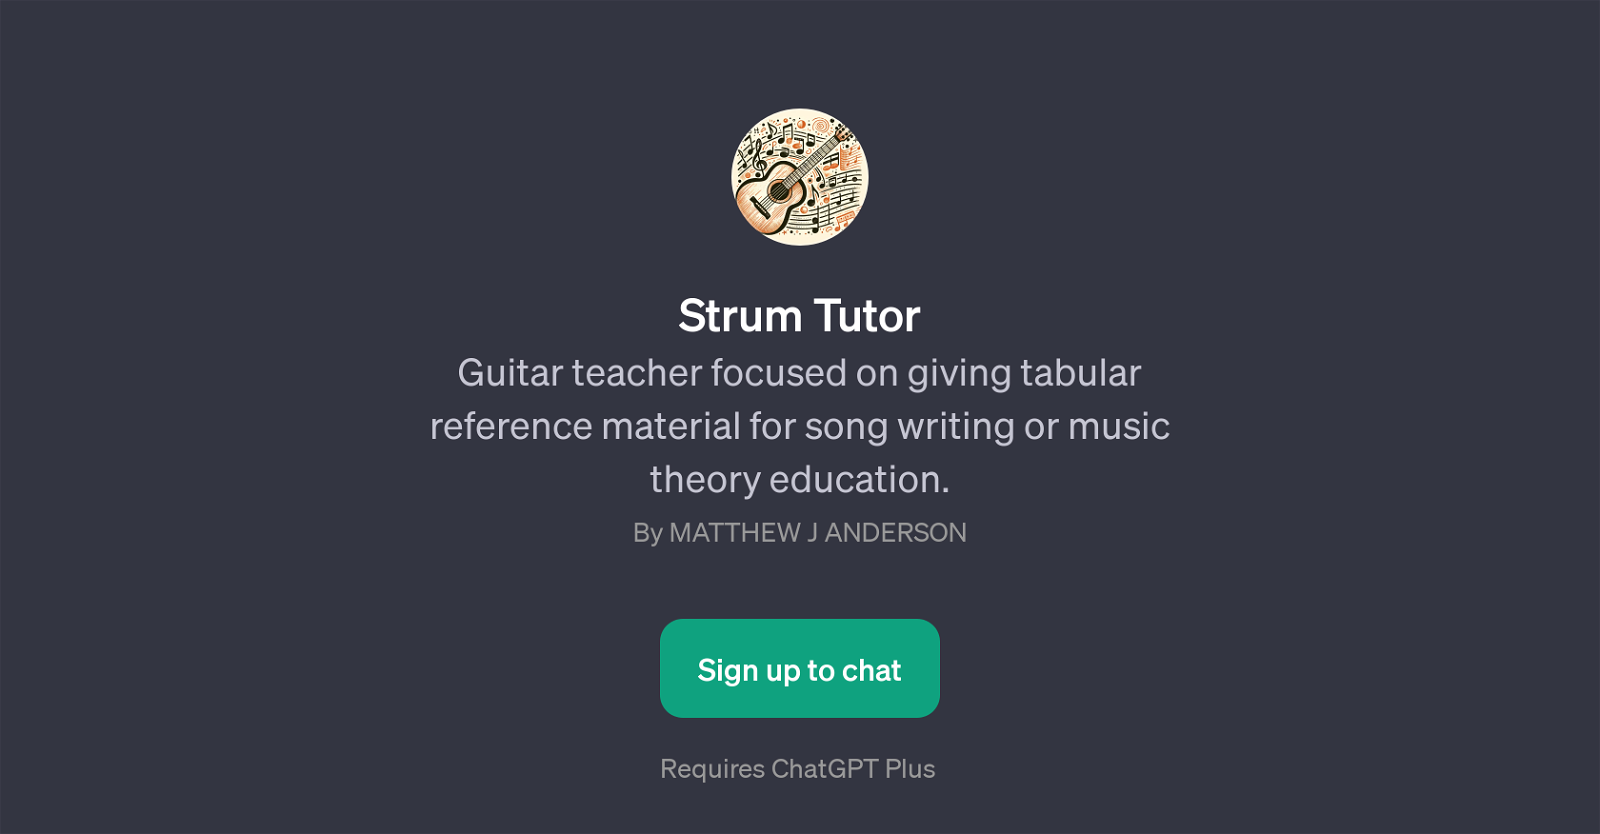 Strum Tutor website